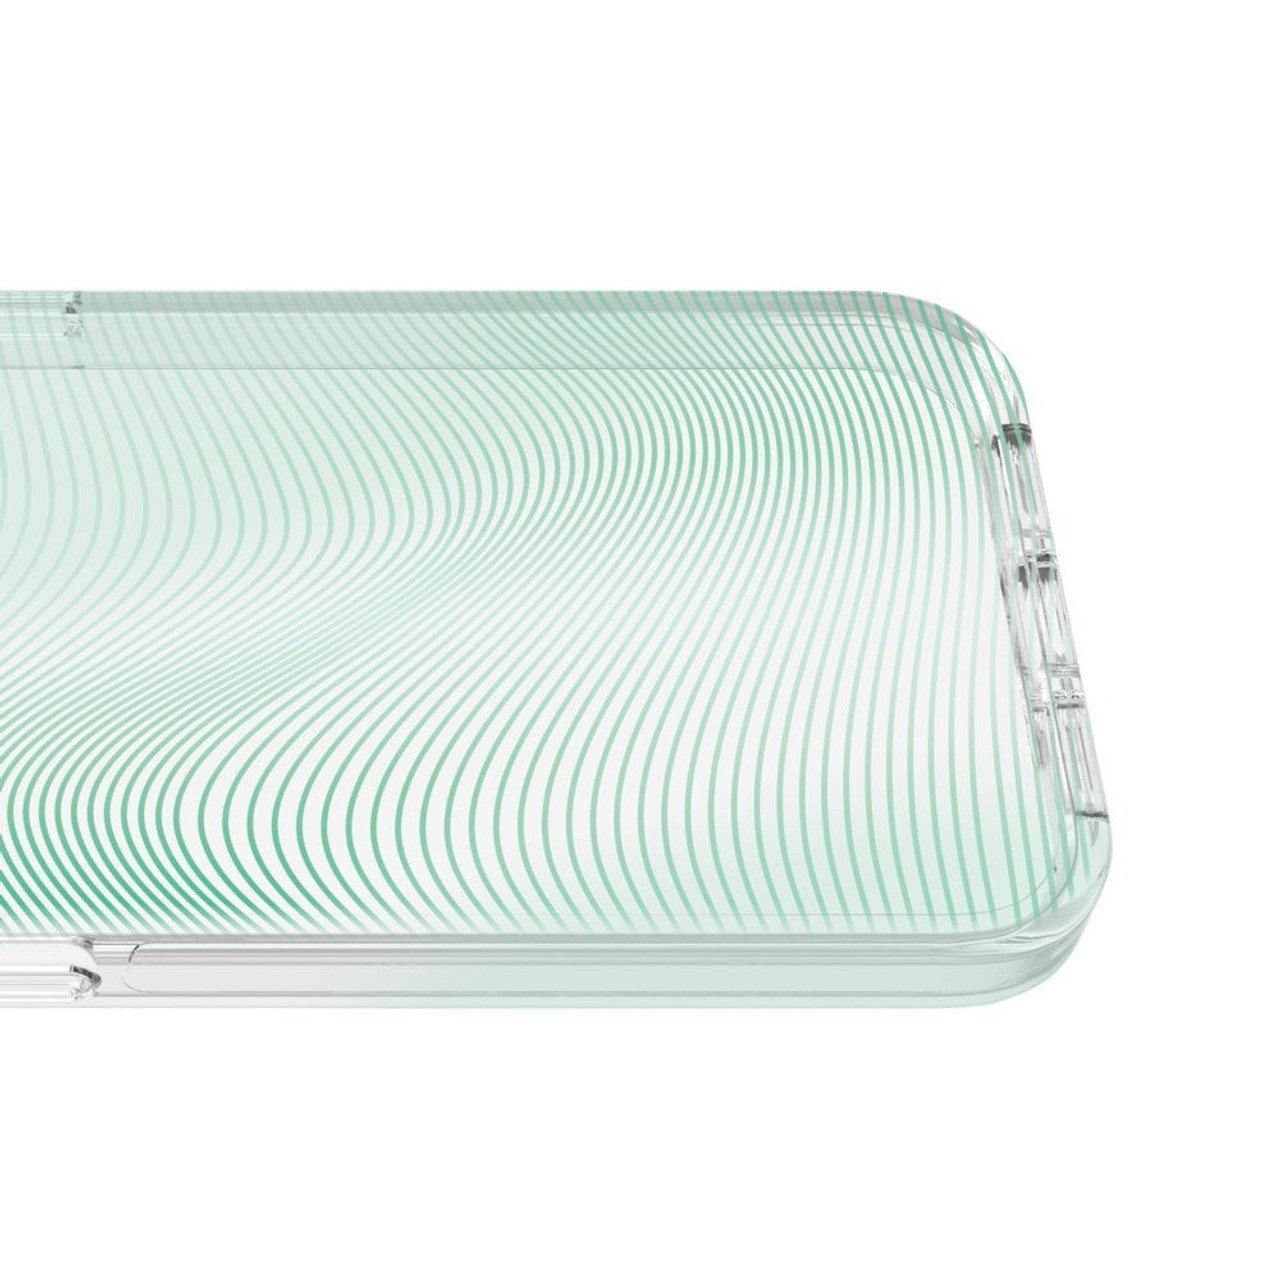 Coque pour iPhone 13 mini Gear4 Crystal Palace Snap Transparent